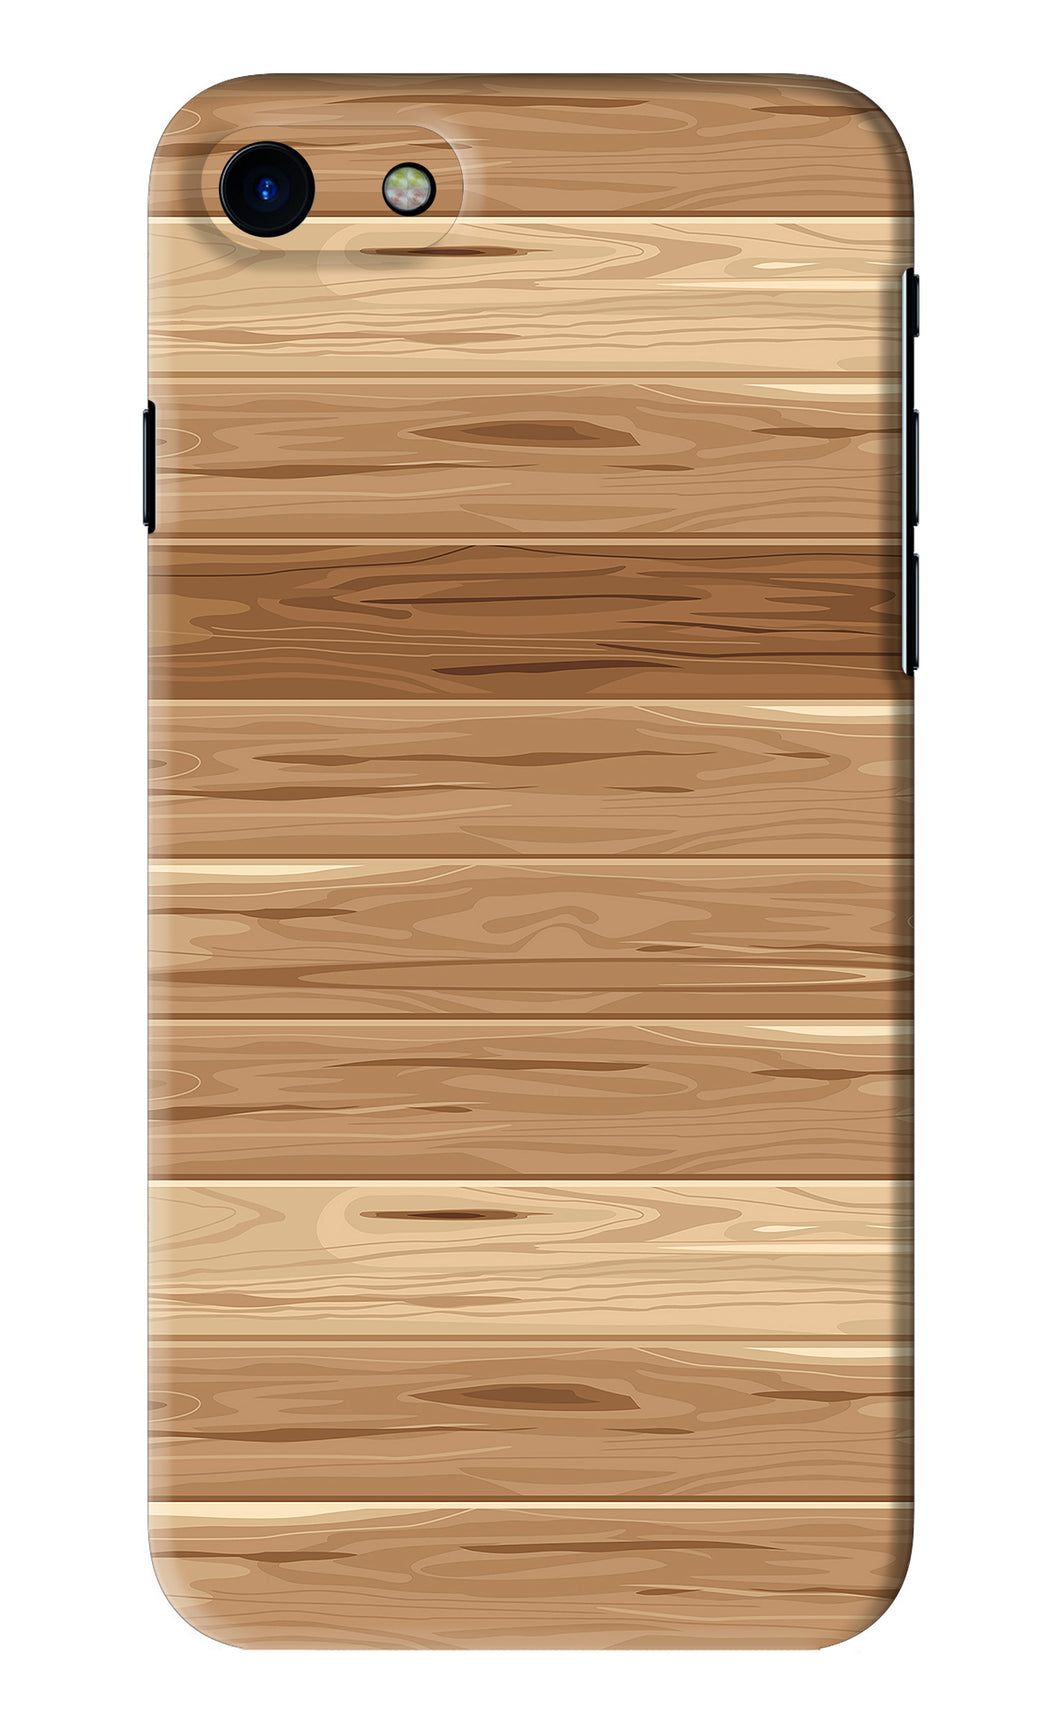 Wooden Vector iPhone SE 2020 Back Skin Wrap